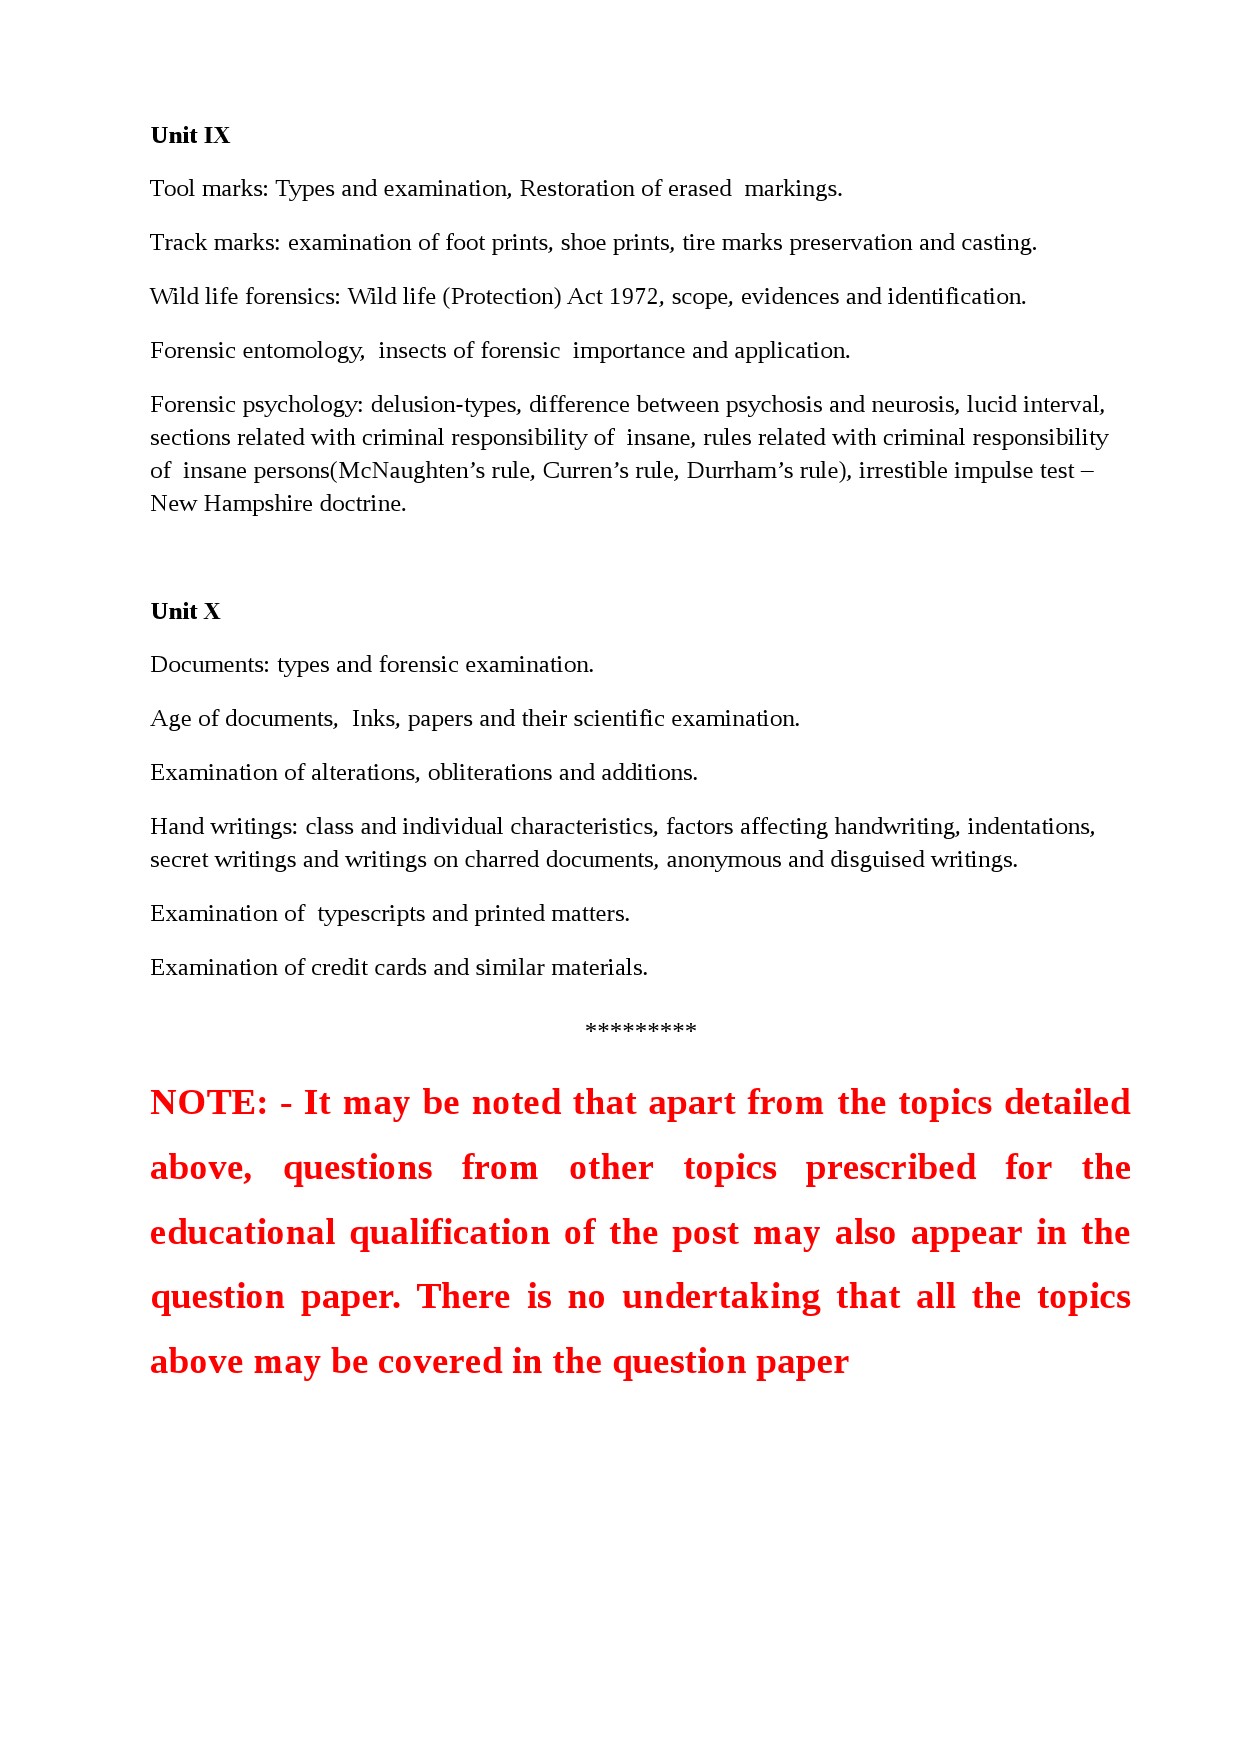 Scientific Officer Chemical Examiners Laboratory KPSC Exam Syllabus April 2021 - Notification Image 7